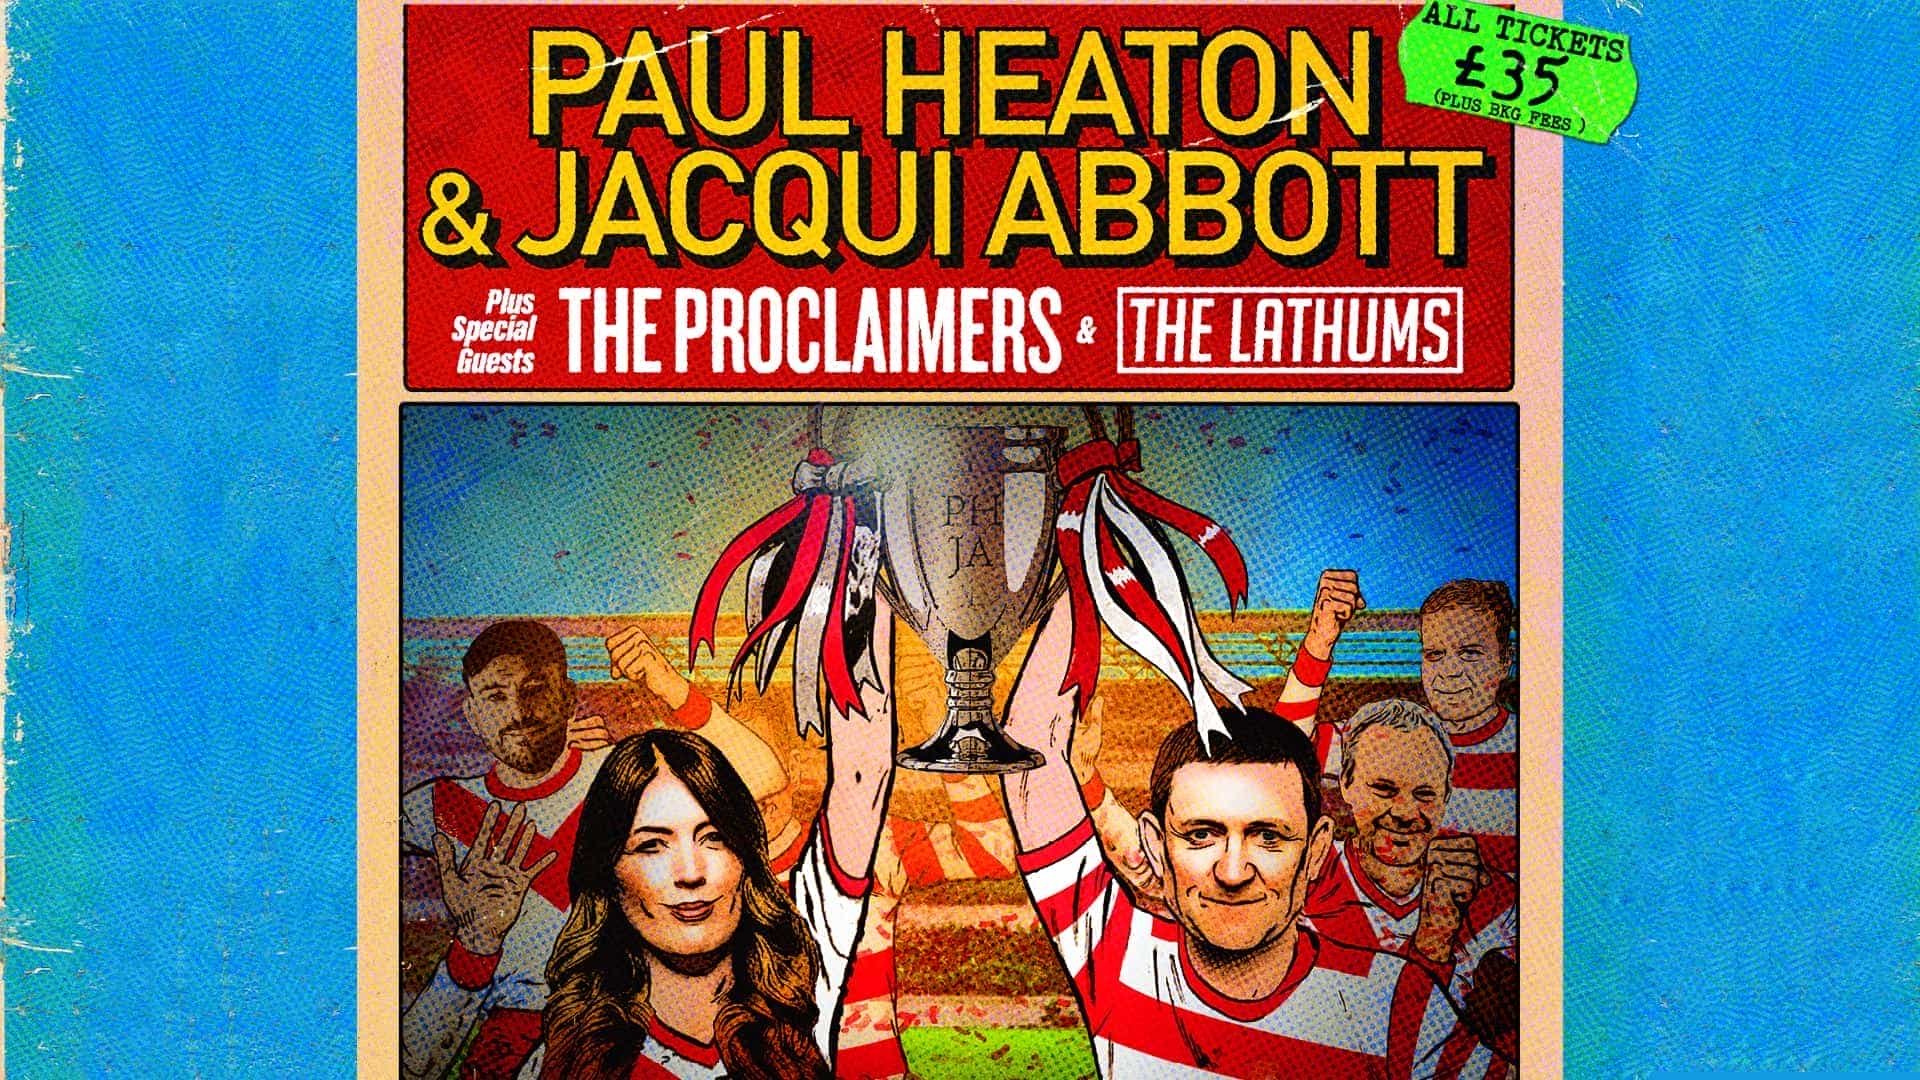 Paul Heaton & Jacqui Abbott + The Proclaimers + The Lathums